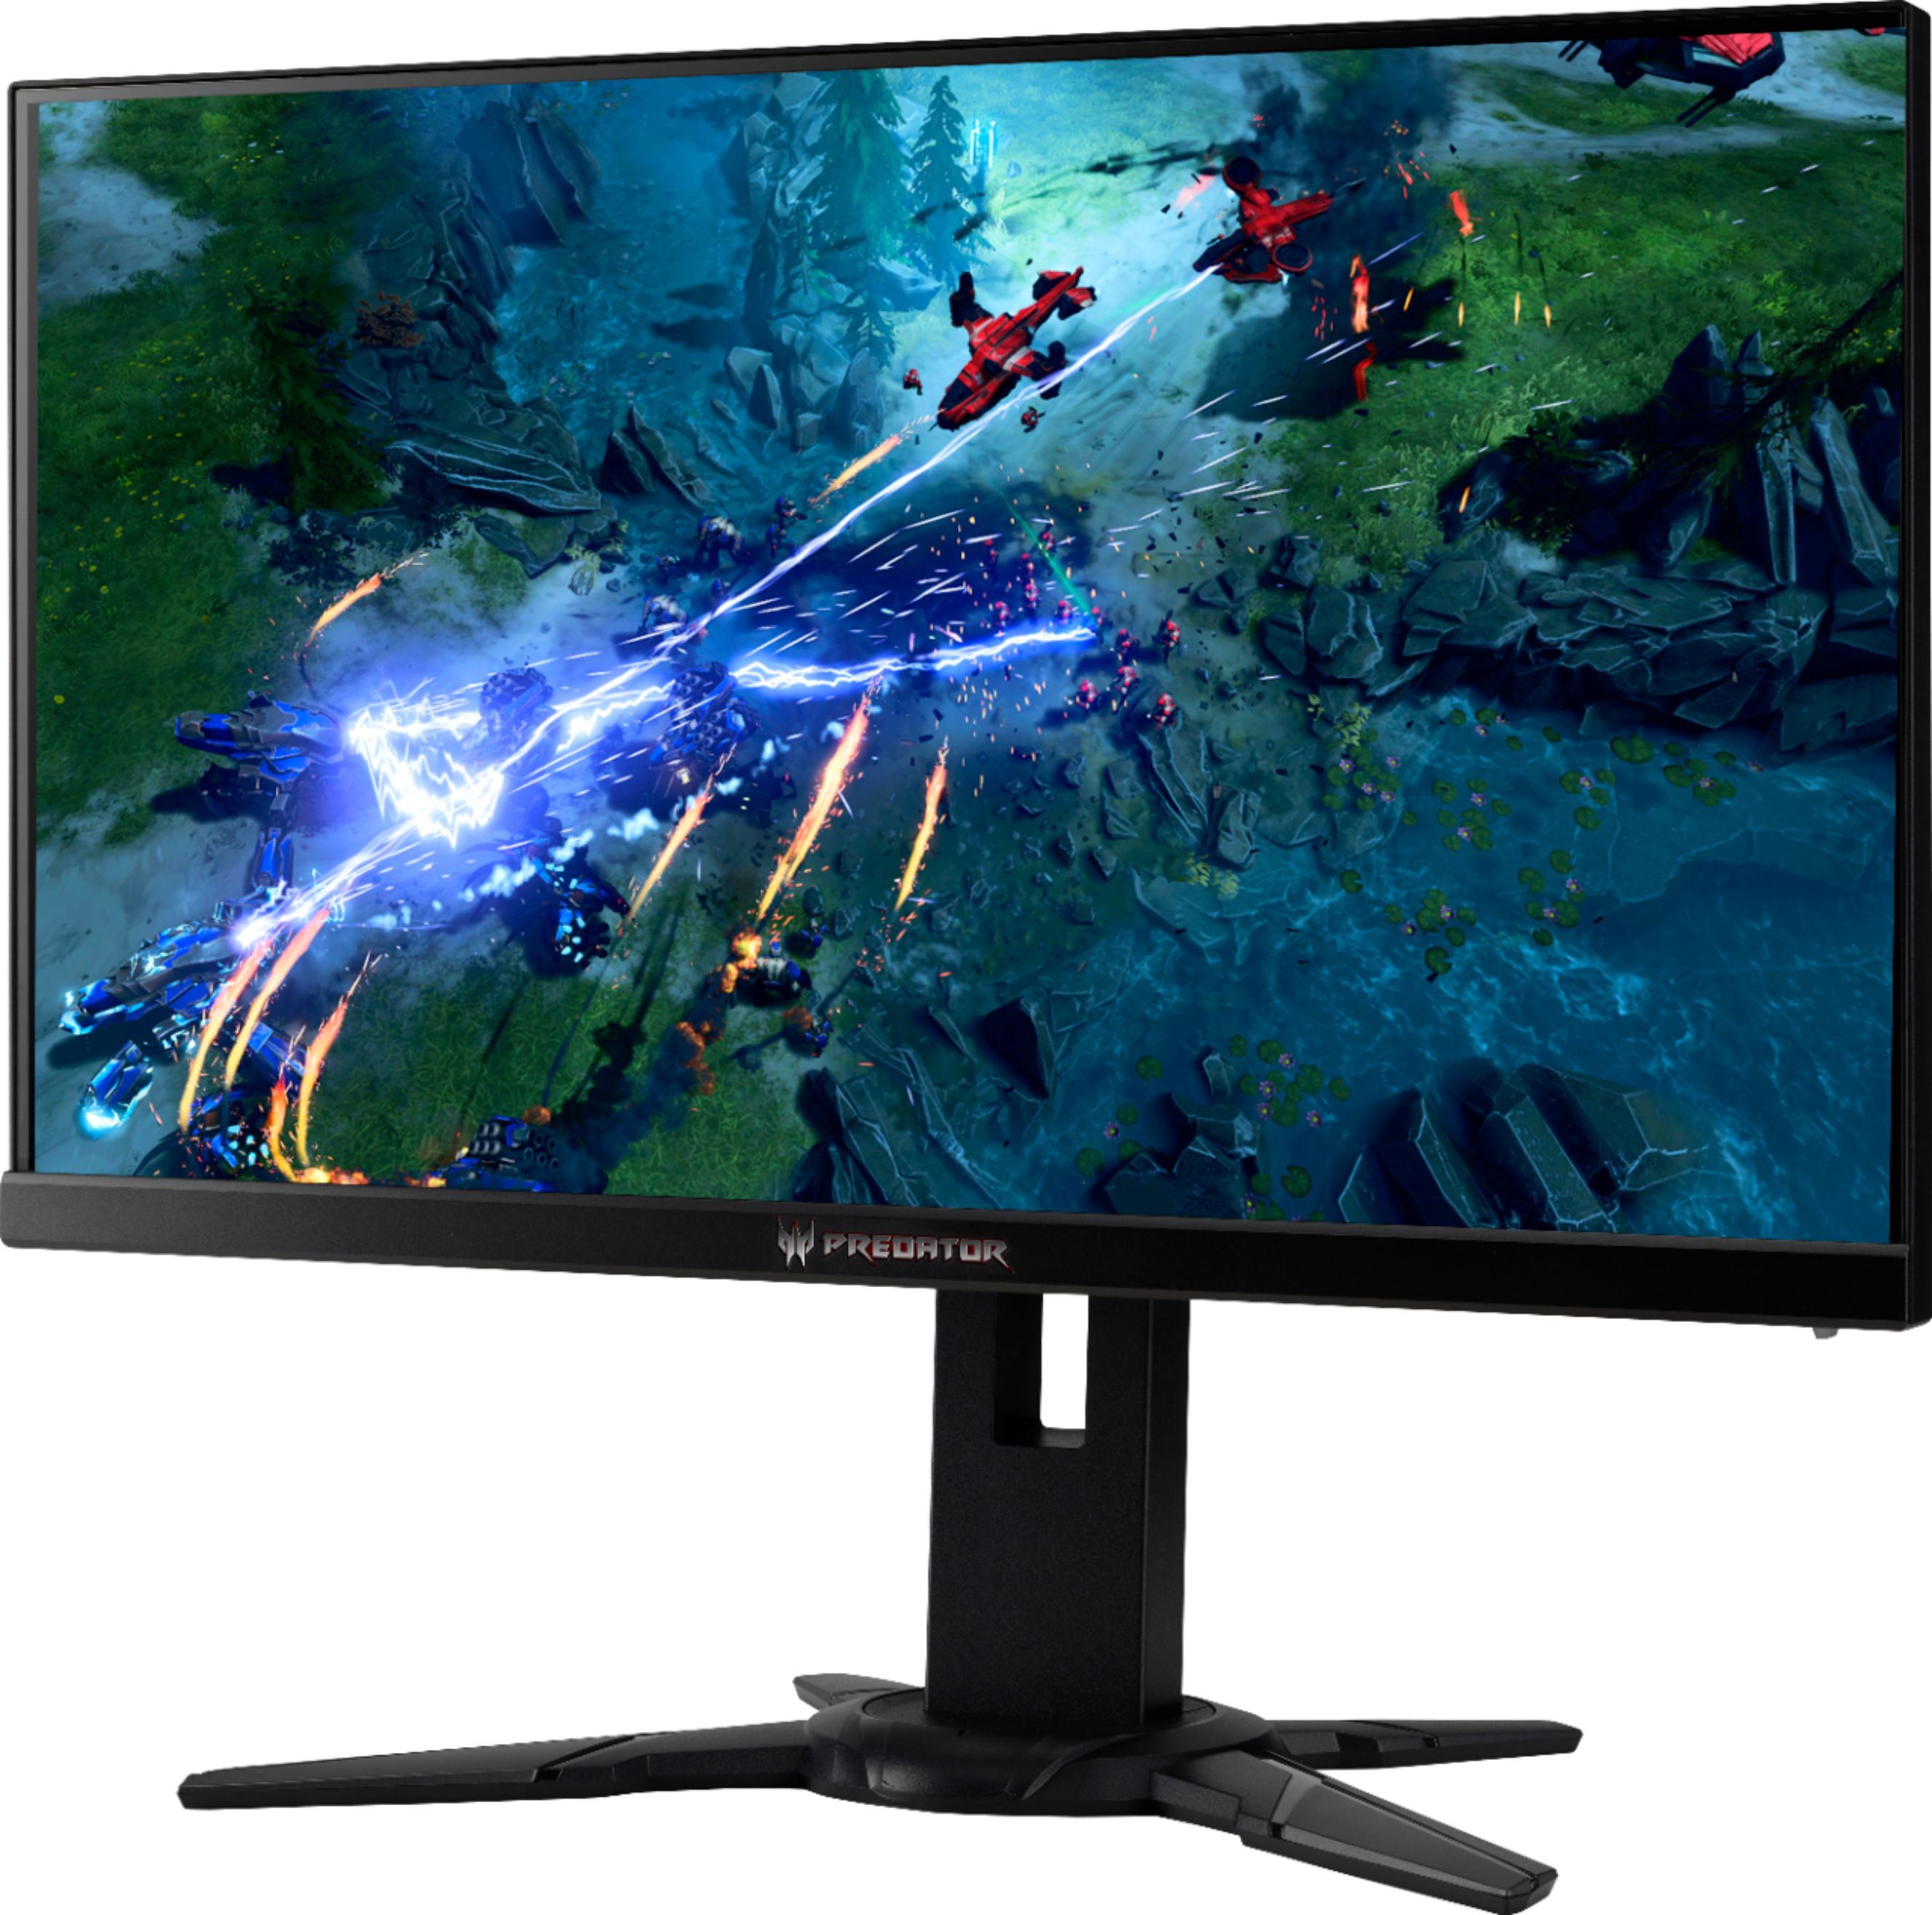 Left View: Acer - Predator XB272 27" LED FHD G-SYNC Monitor (DisplayPort, HDMI, USB) - Black